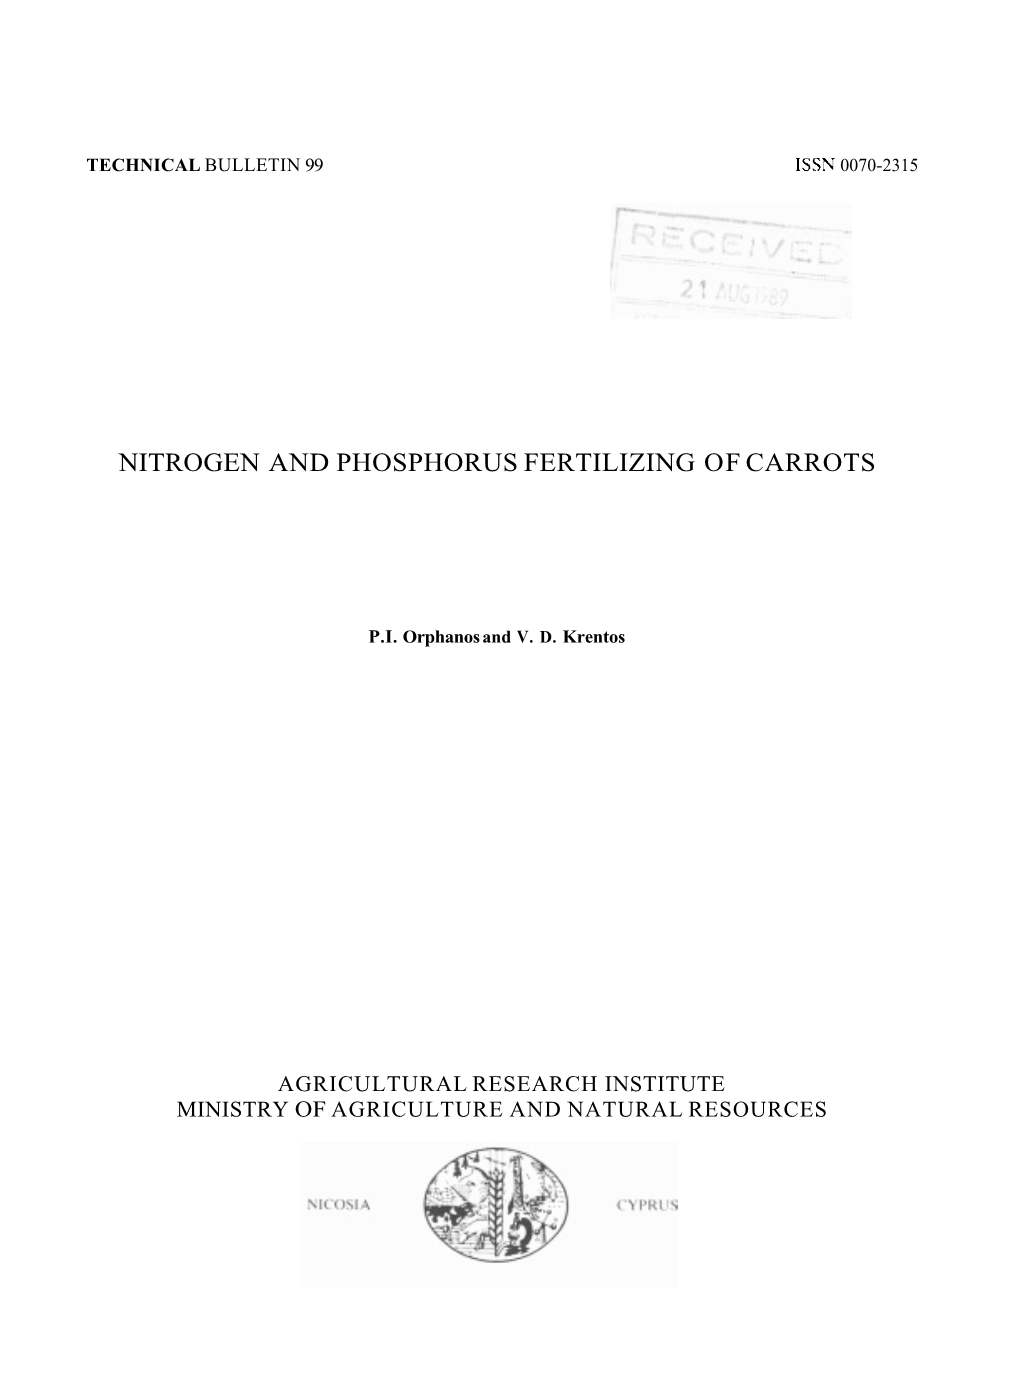 Nitrogen and Phosphorus Fertilizing of Carrots